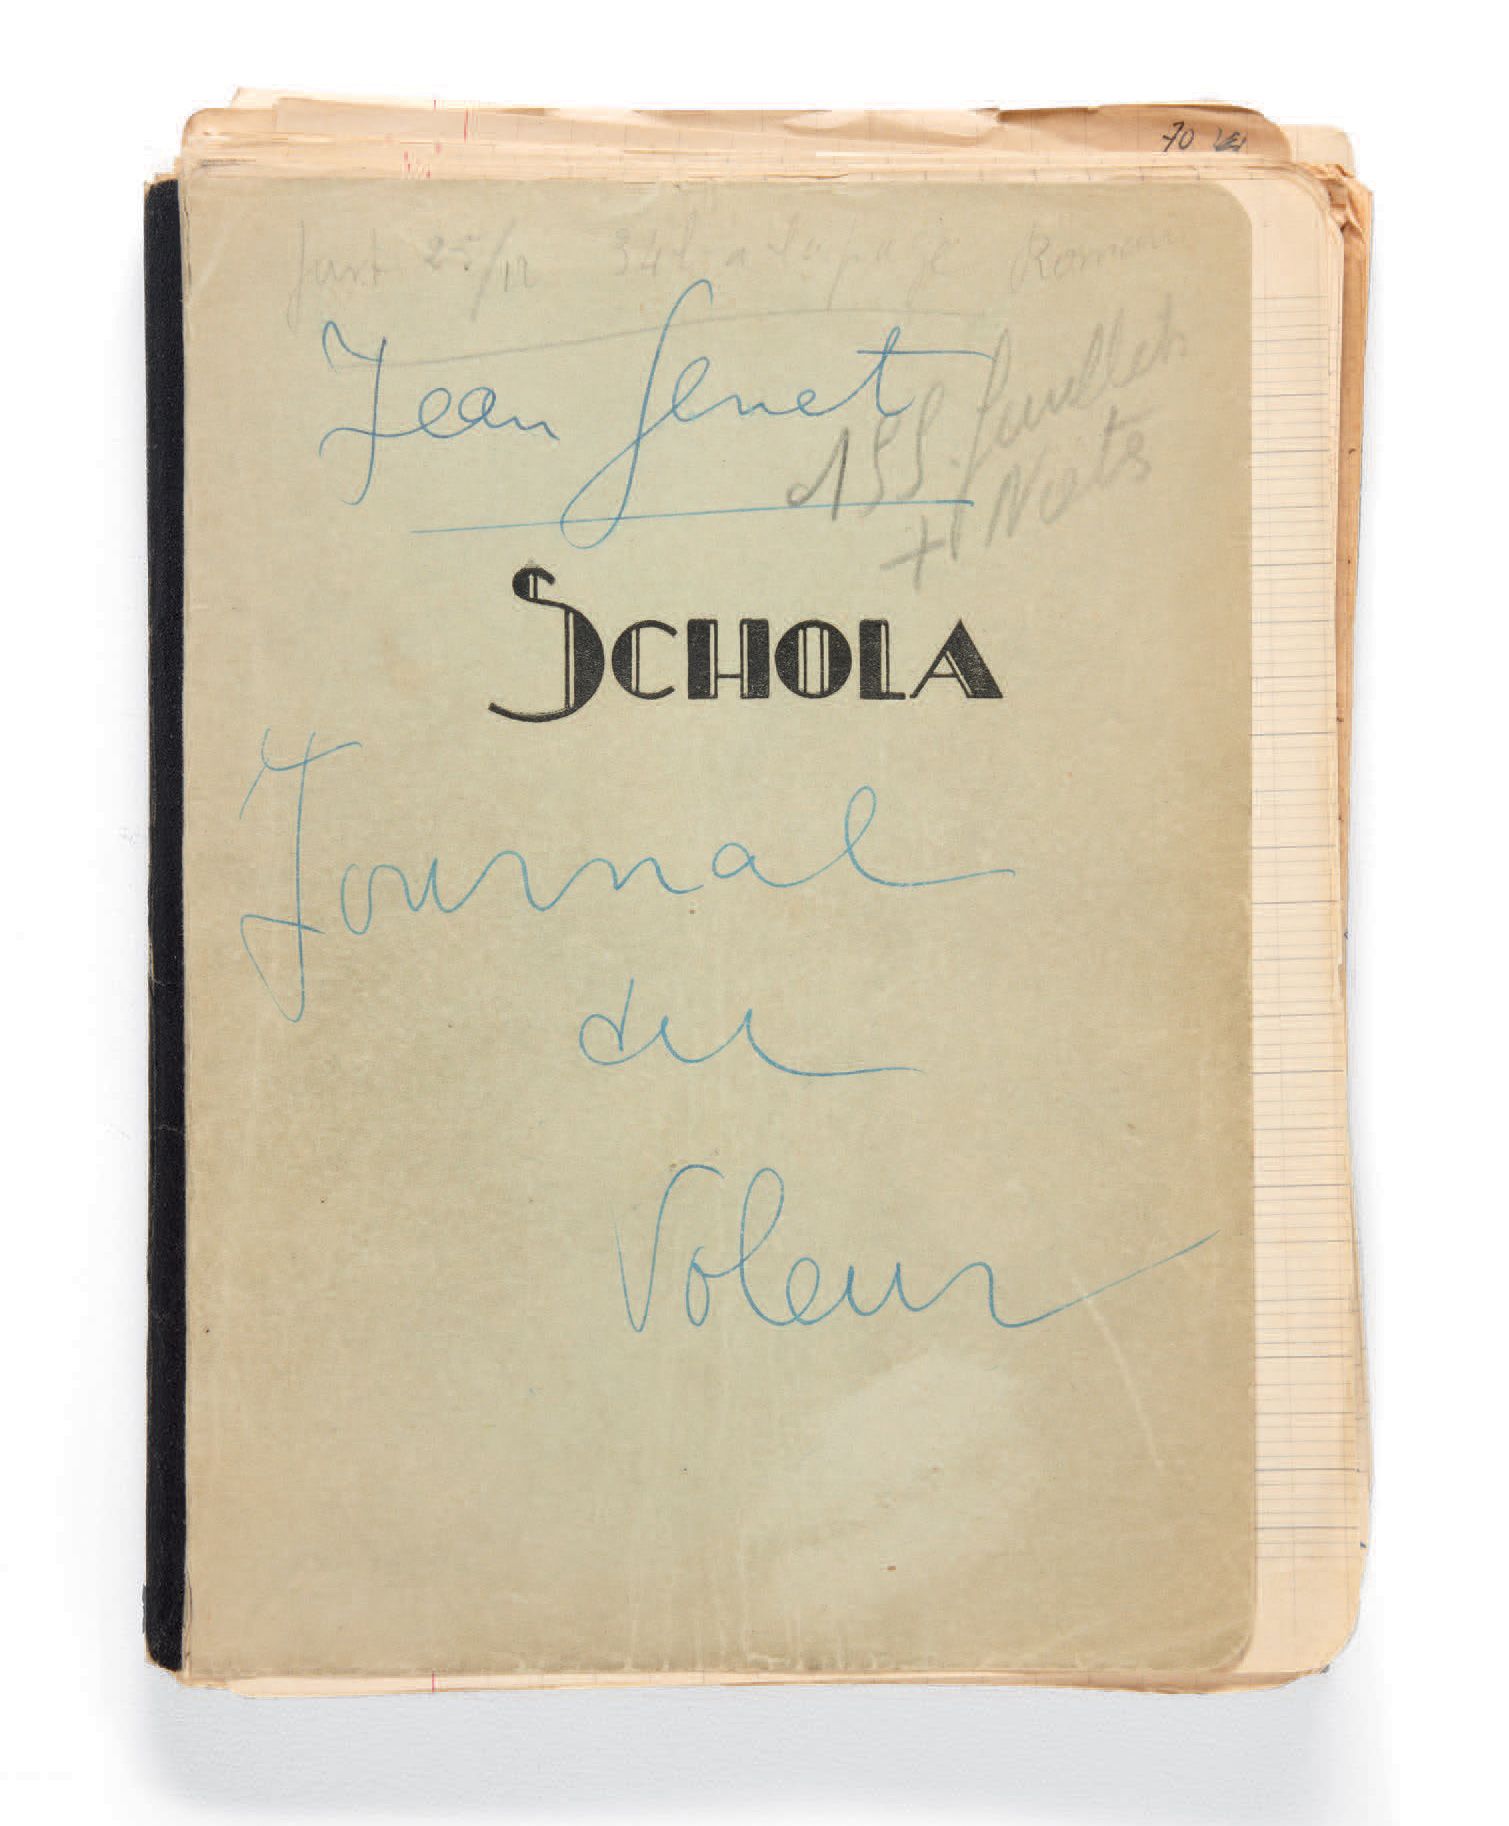 GENET, Jean. Le Journal du voleur. Ottobre 1947.
Manoscritto autografo firmato: &hellip;